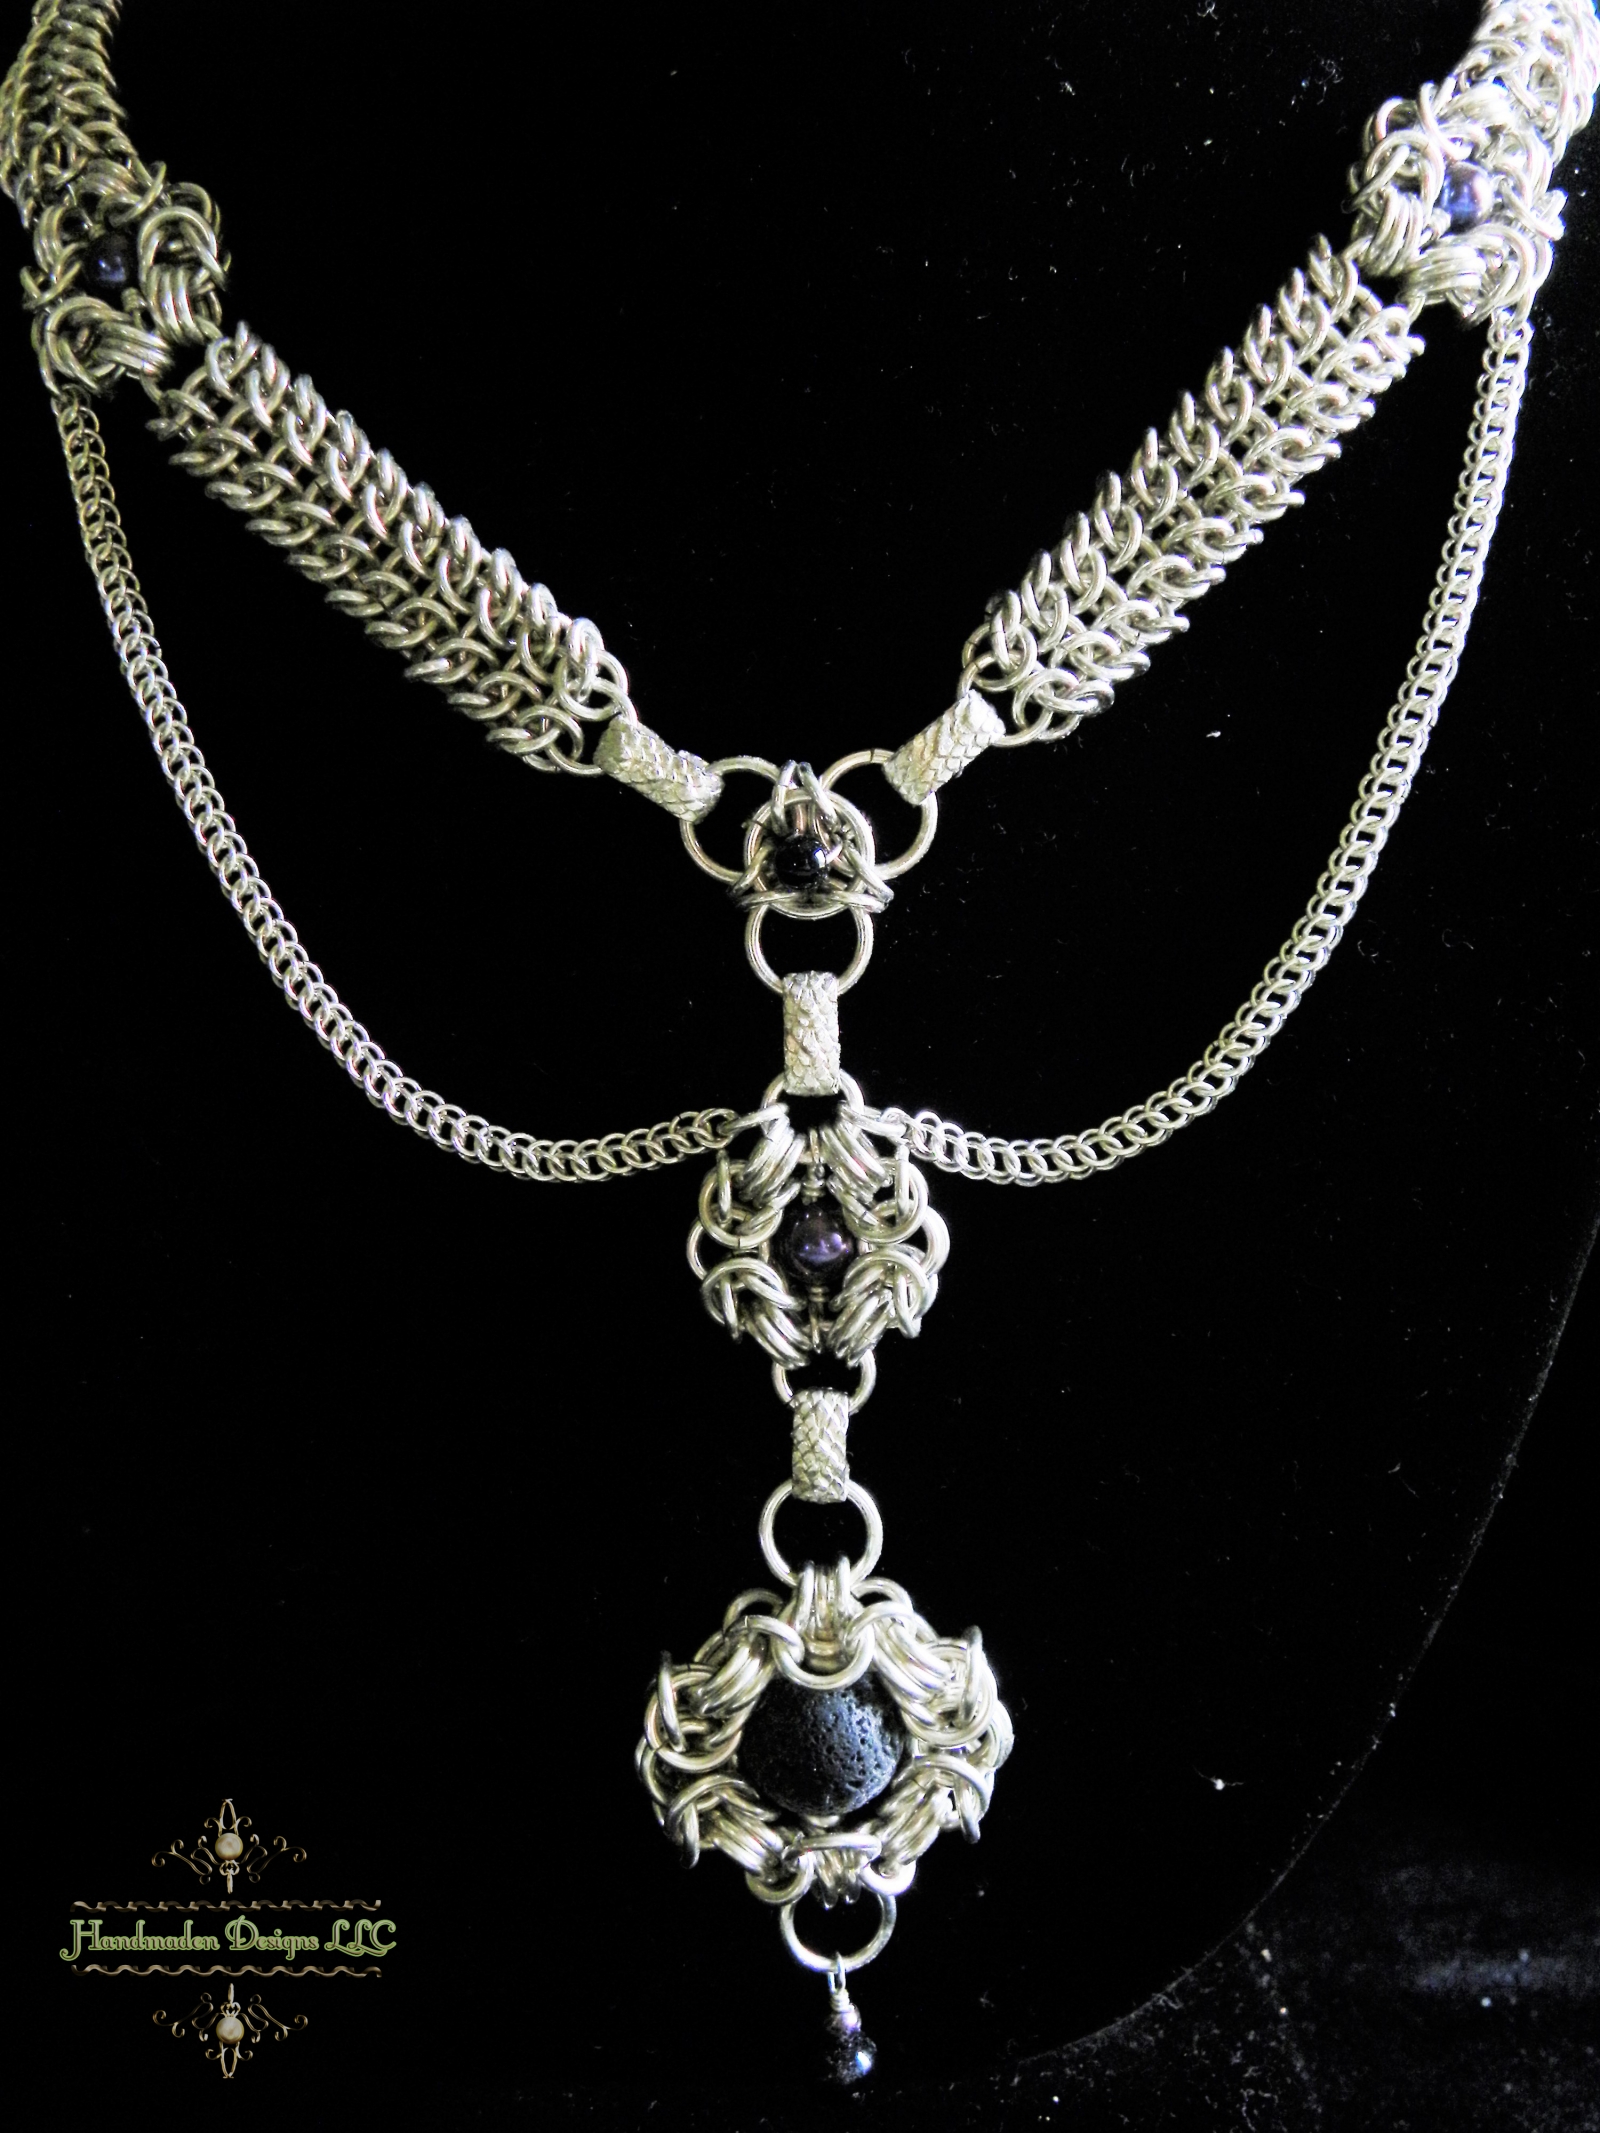 Sterling silver chainmaille statement necklace - Handmaden Designs LLC ...